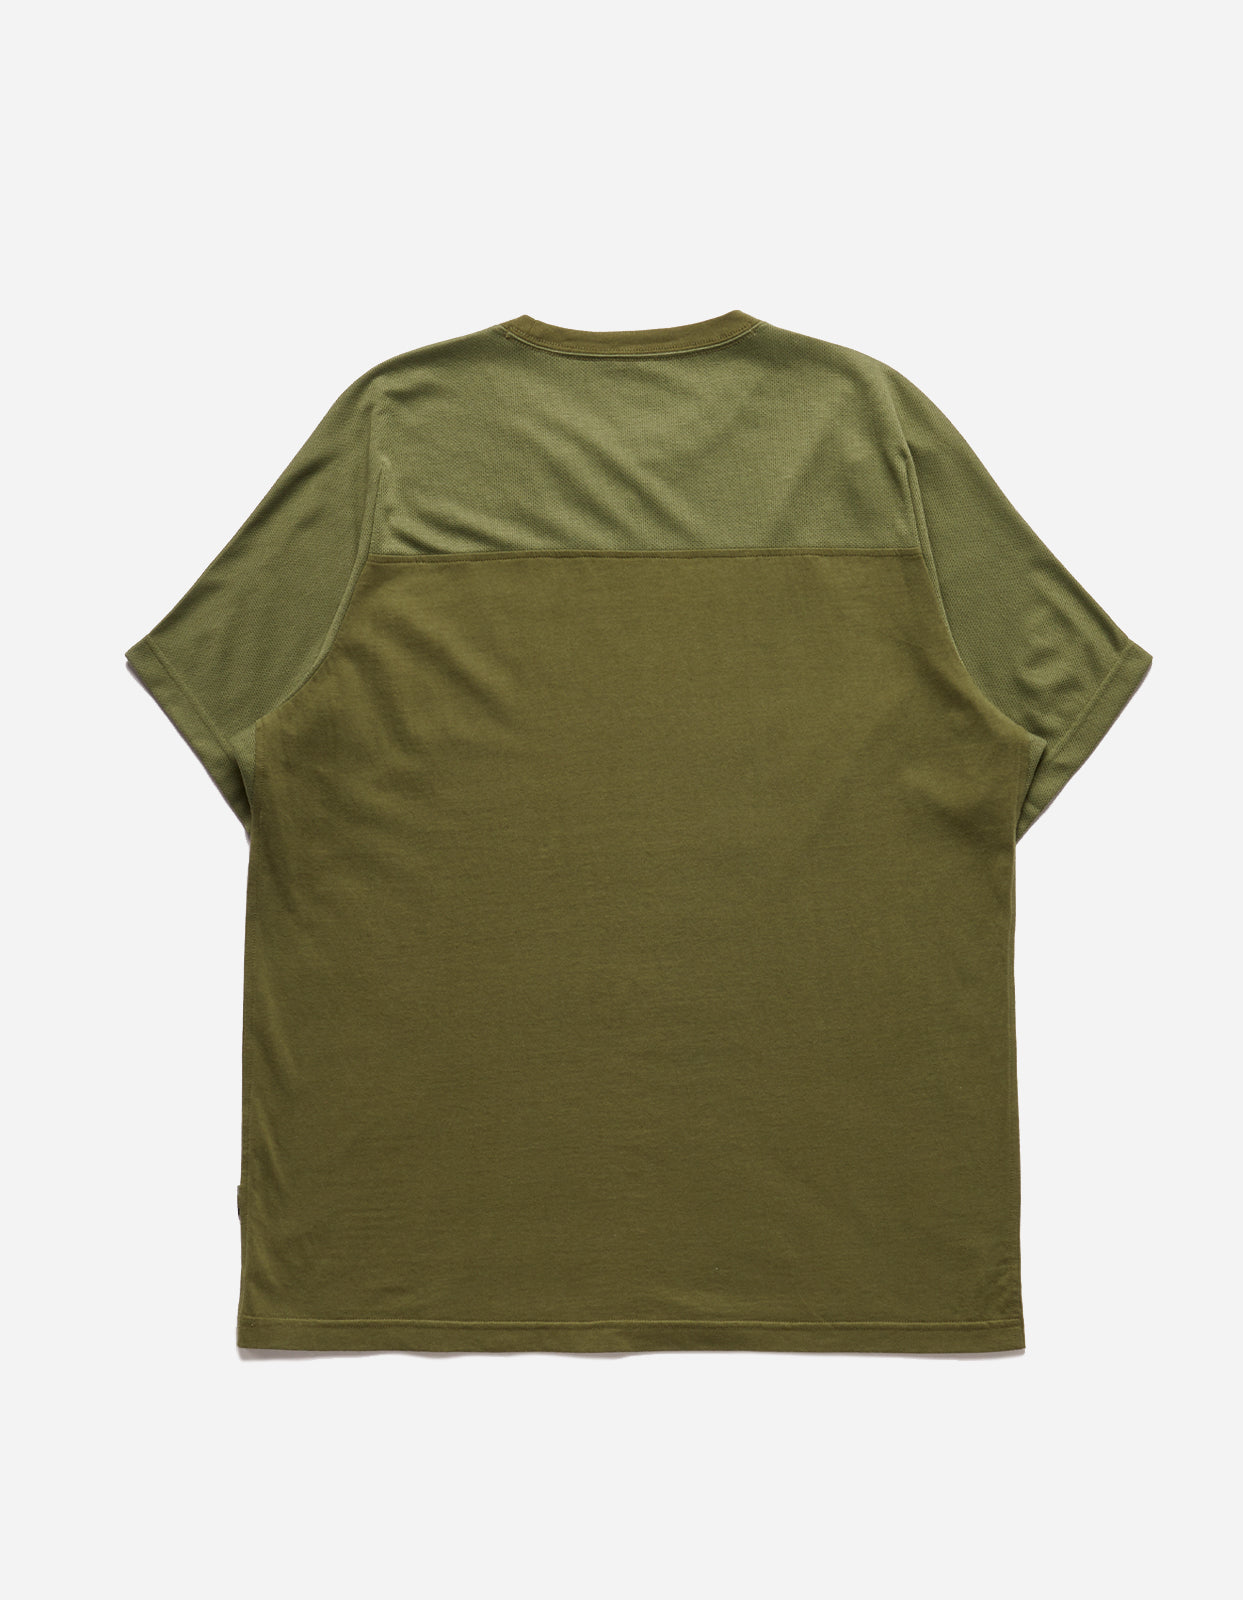 5045 Polartec Dry T-Shirt Olive OG-107F